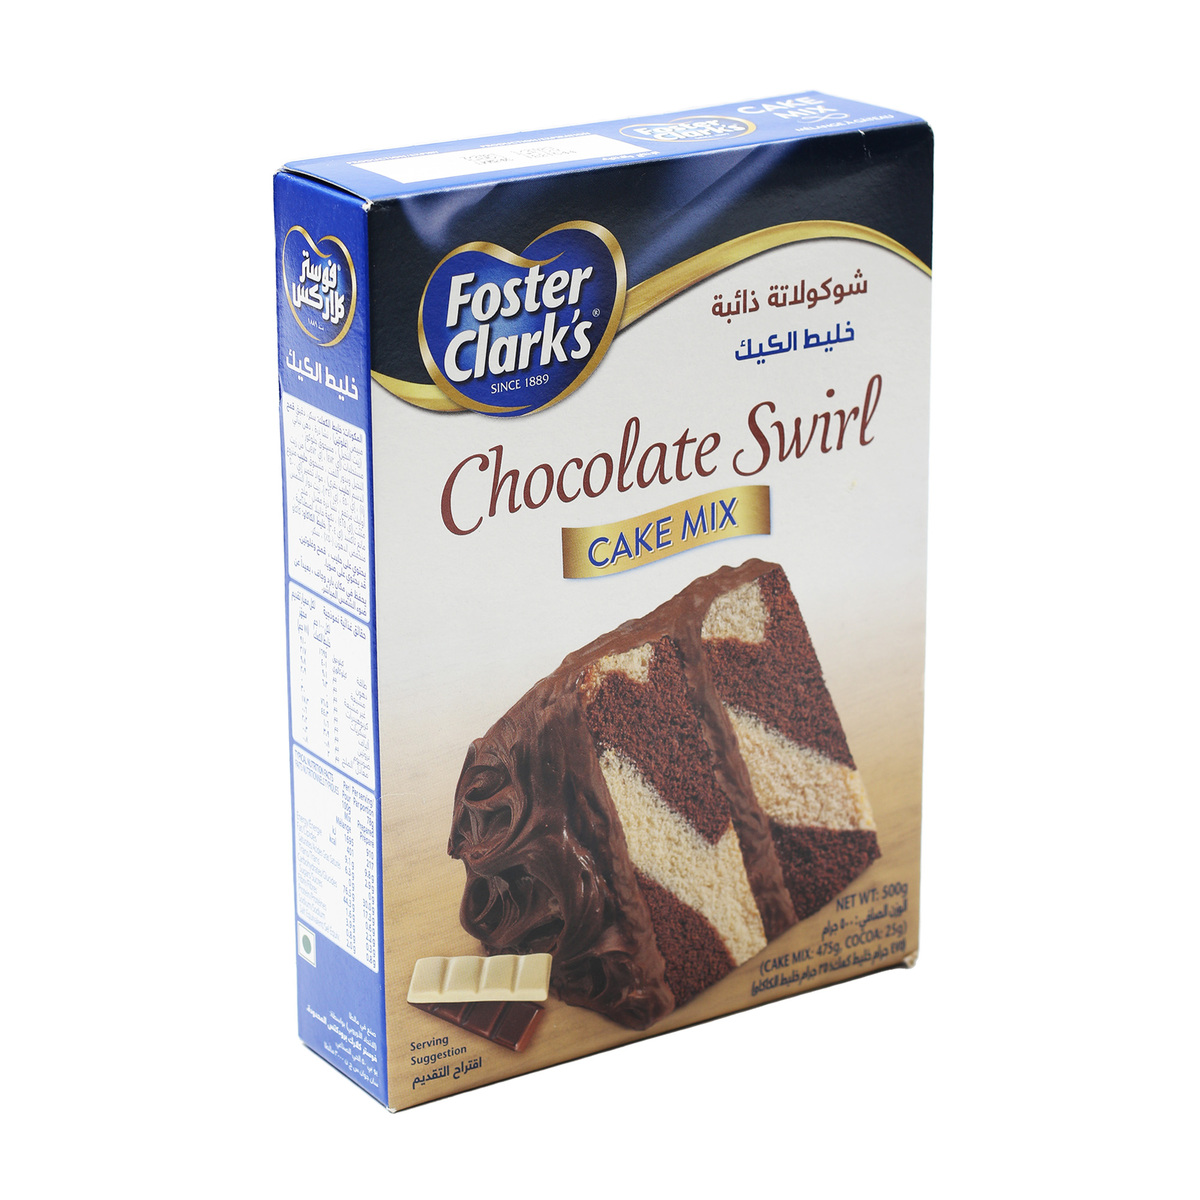 Foster Clarks Cake Mix Dark Chocolate Swirl 500g